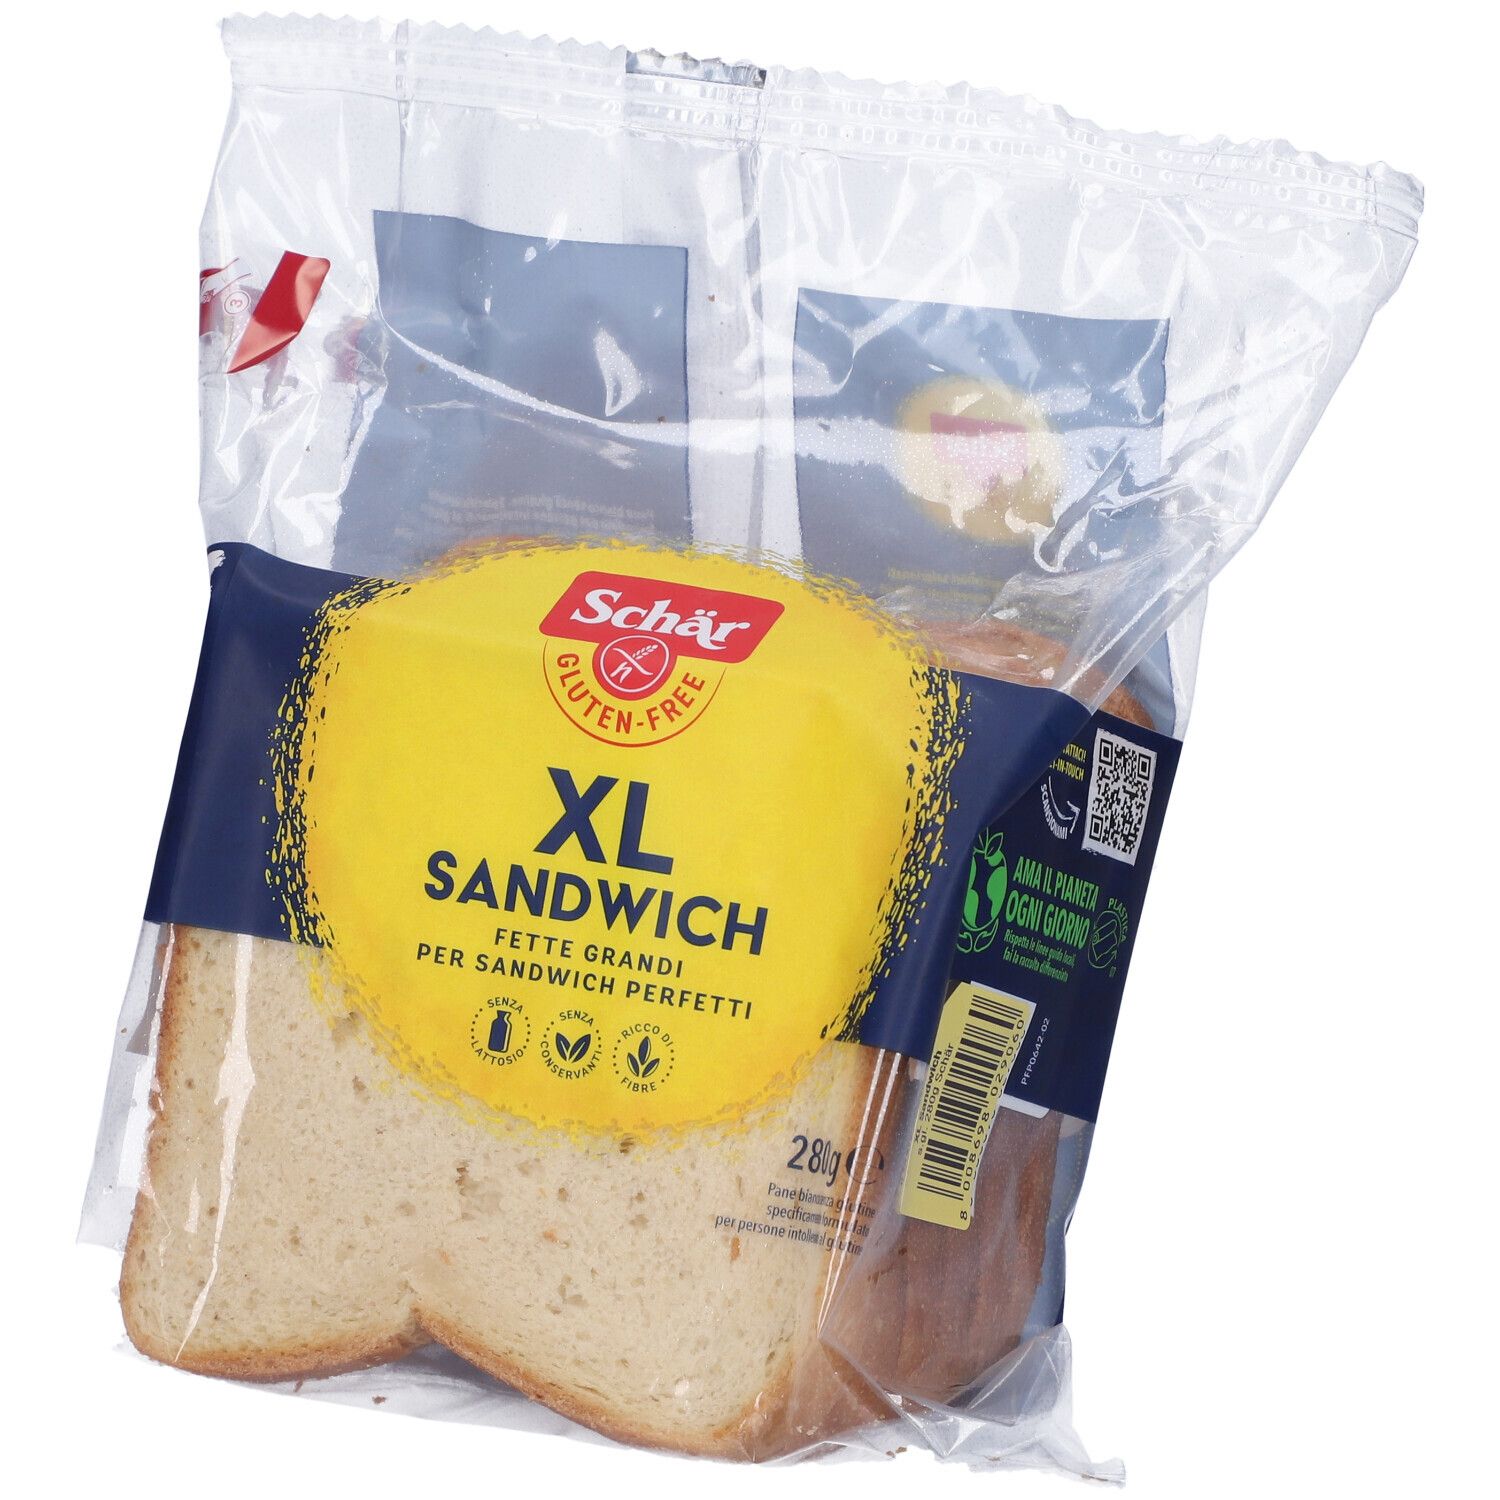 Schär XL Sandwich